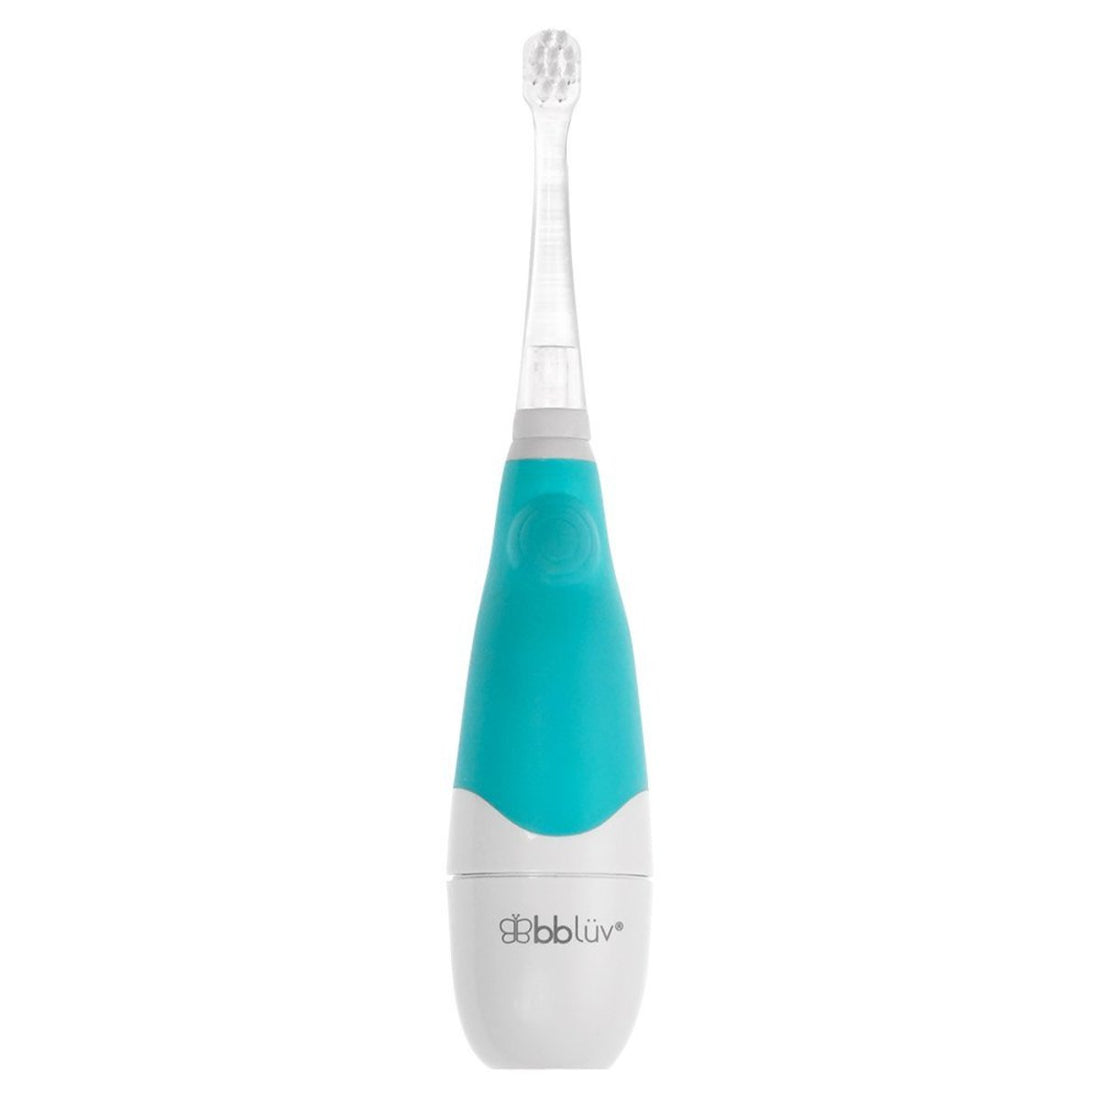 Sonik - 2 Stage Ultrasonic Toothbrush